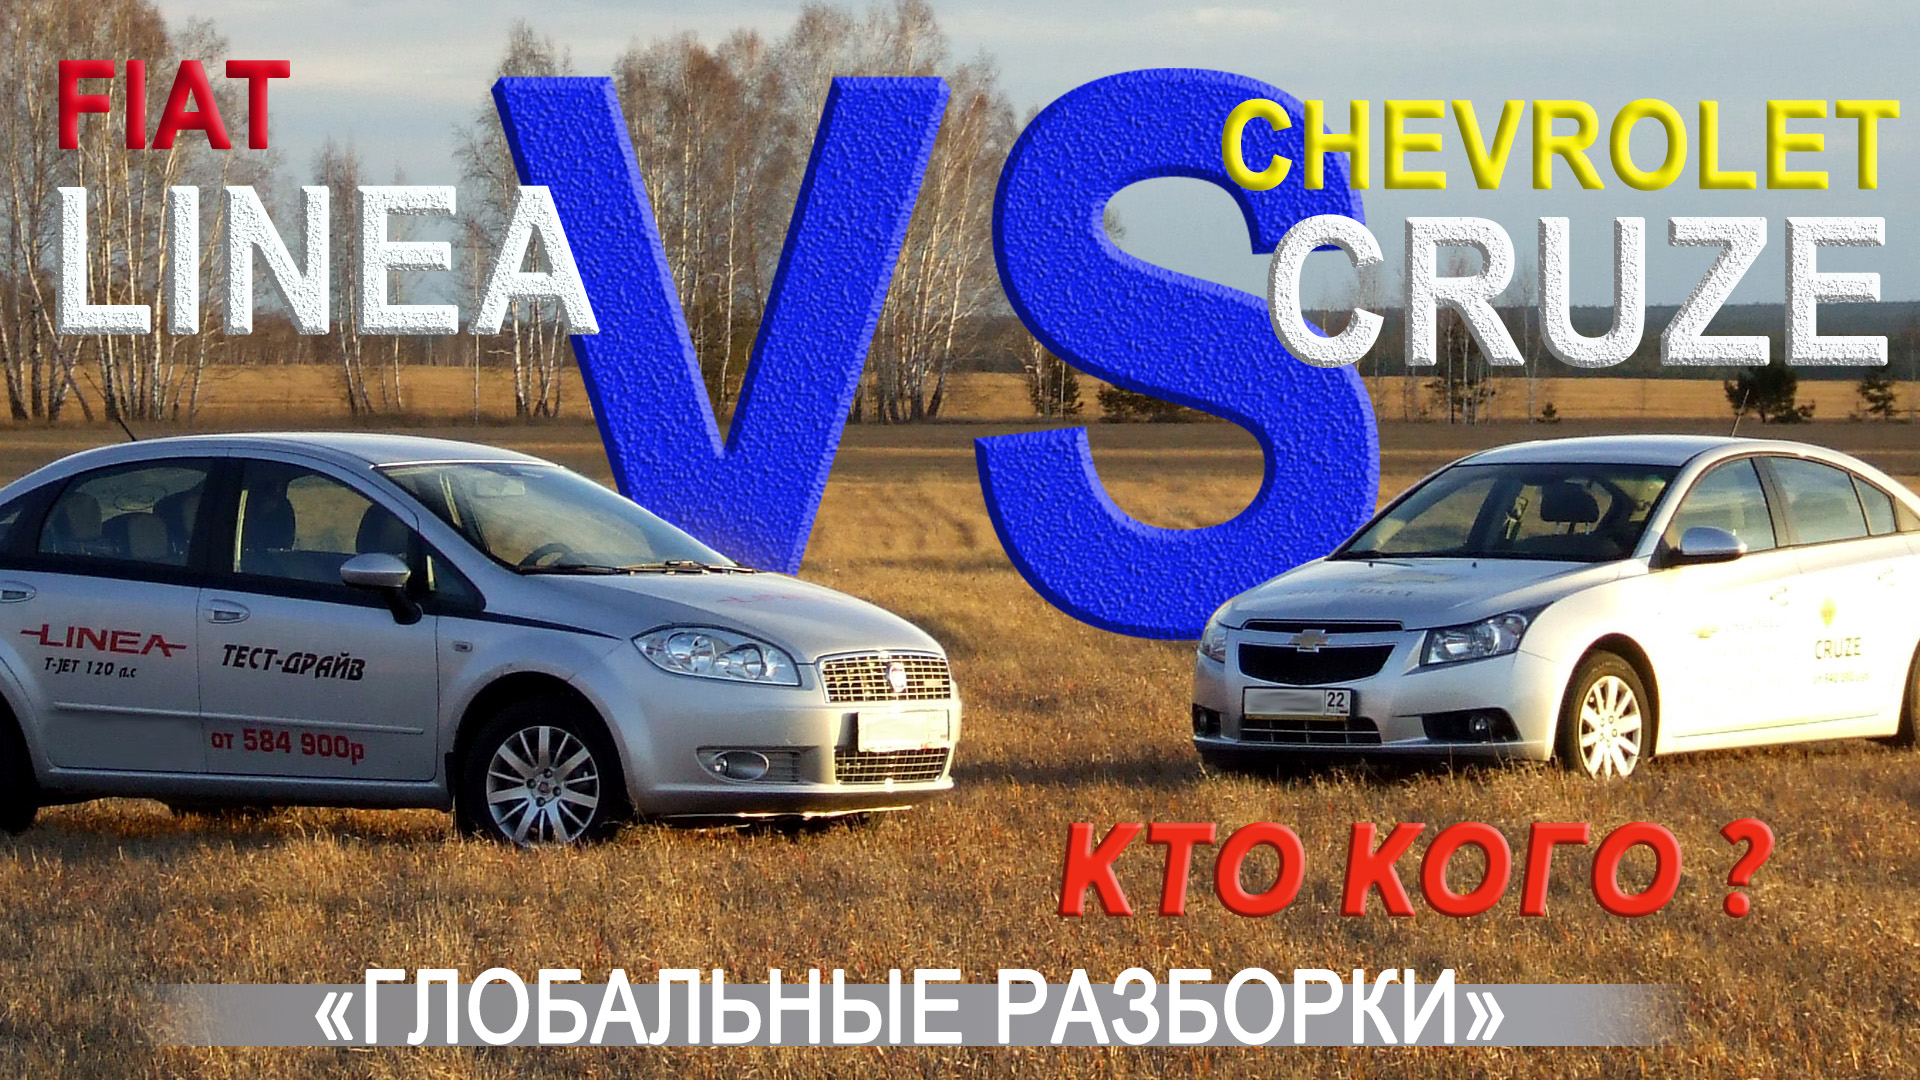 FIAT LINEA vs CHEVROLET CRUZE Сравнительный тест AVTOSALON TV